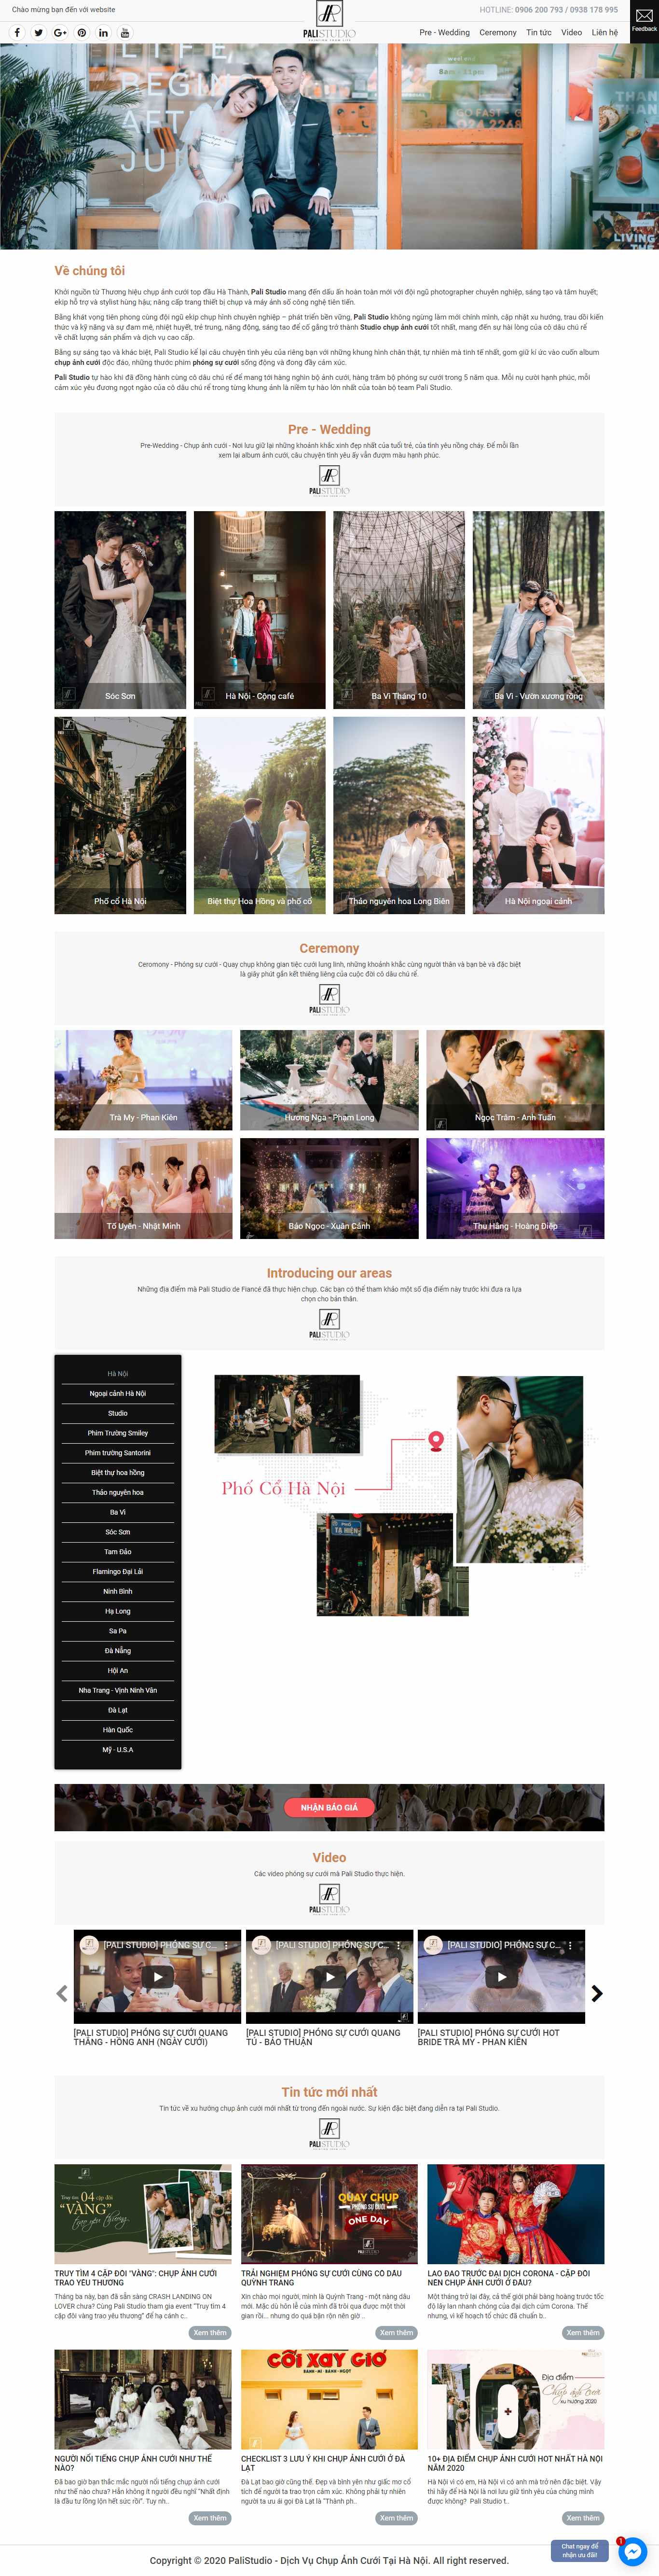 Thiết kế Website studio chụp ảnh cưới - www.palistudio.com